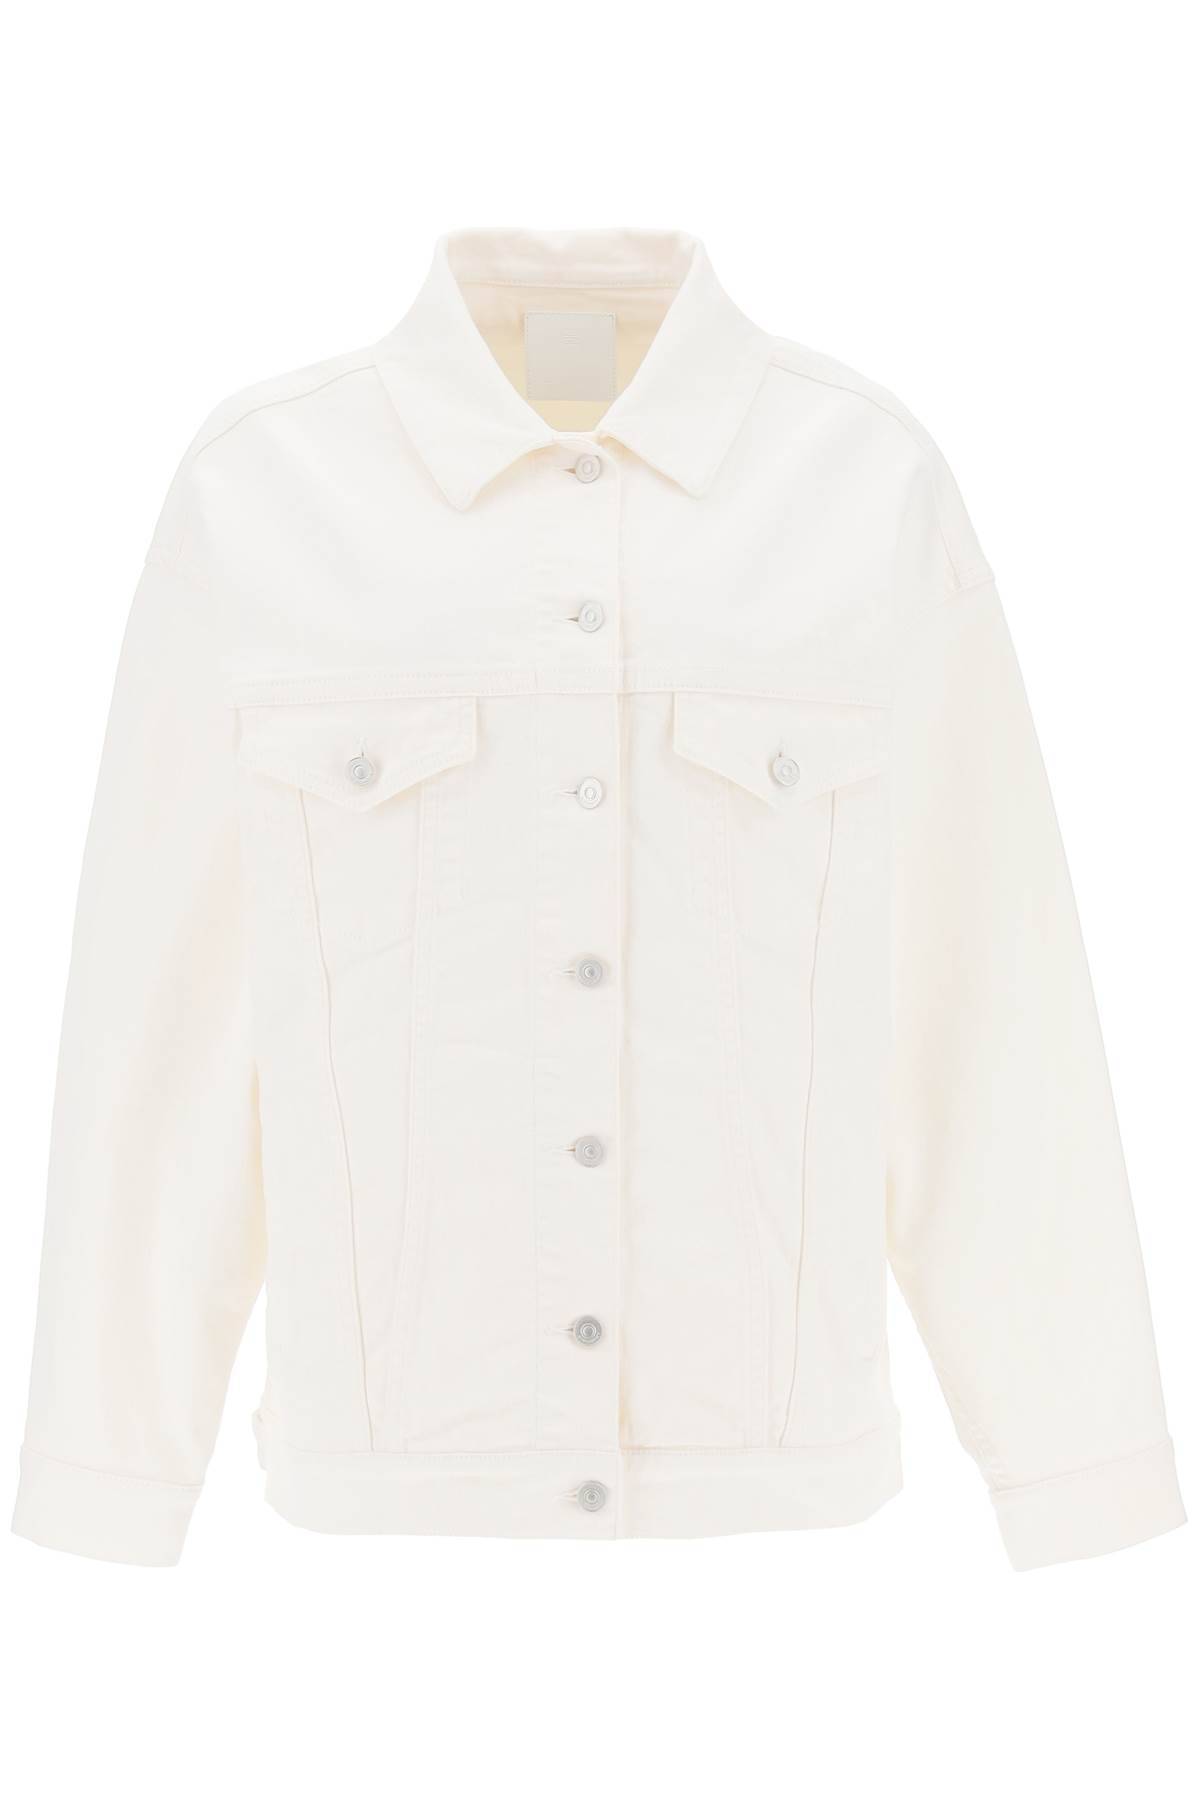 Givenchy Denim Jacket In White